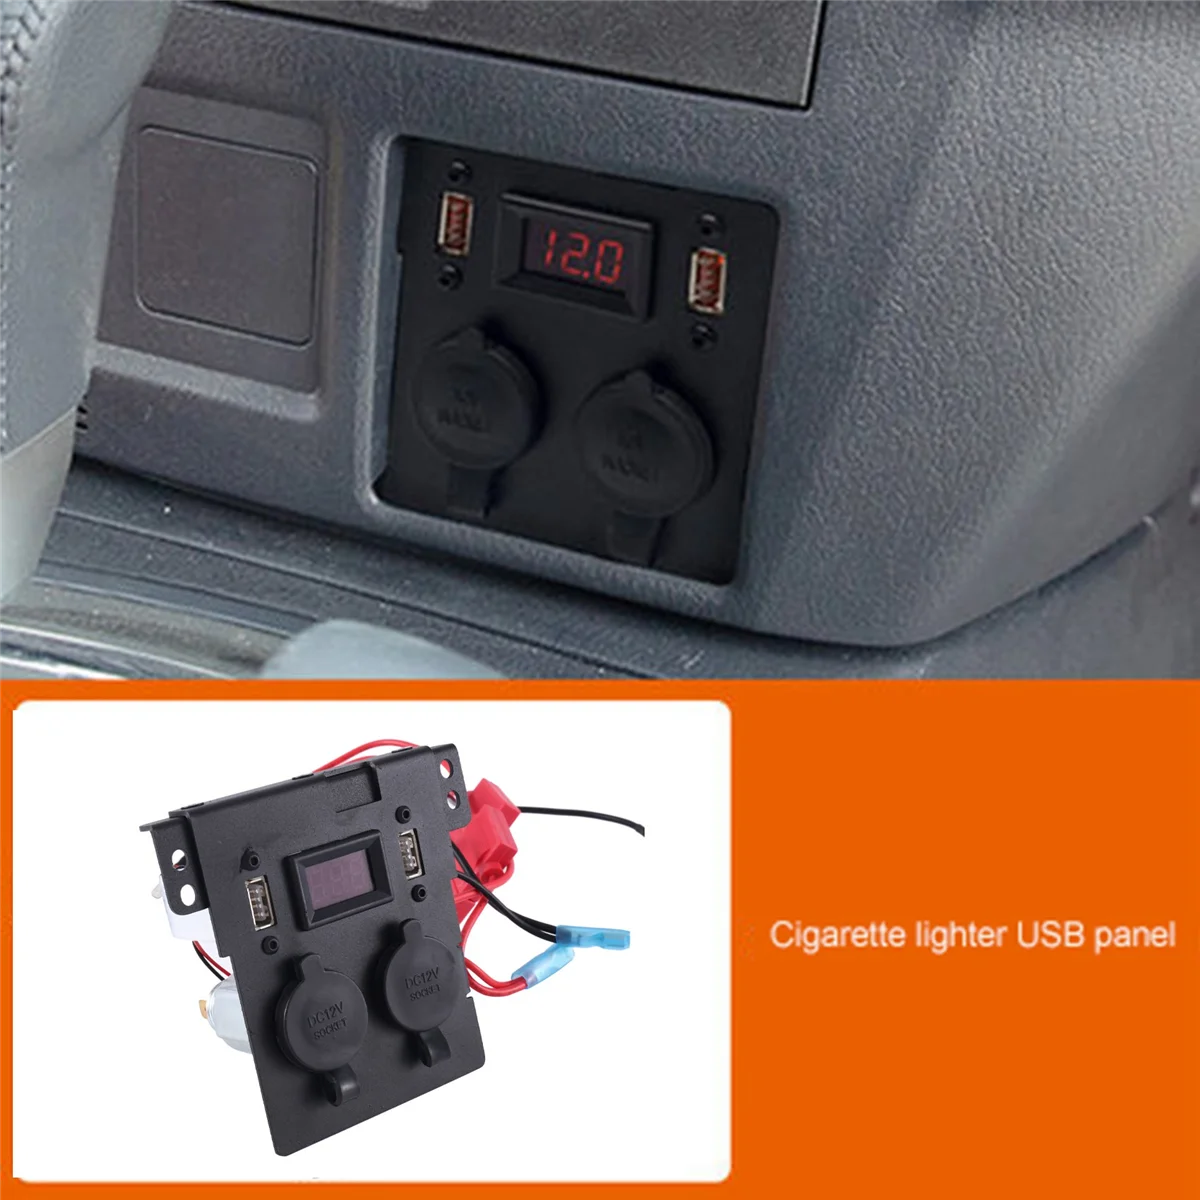 

Car Cigarette Lighter QC3.0 Fast Charging Panel for Mitsubishi Pajero V97 V93 V87 Pajero USB Cigarette Lighter Panel